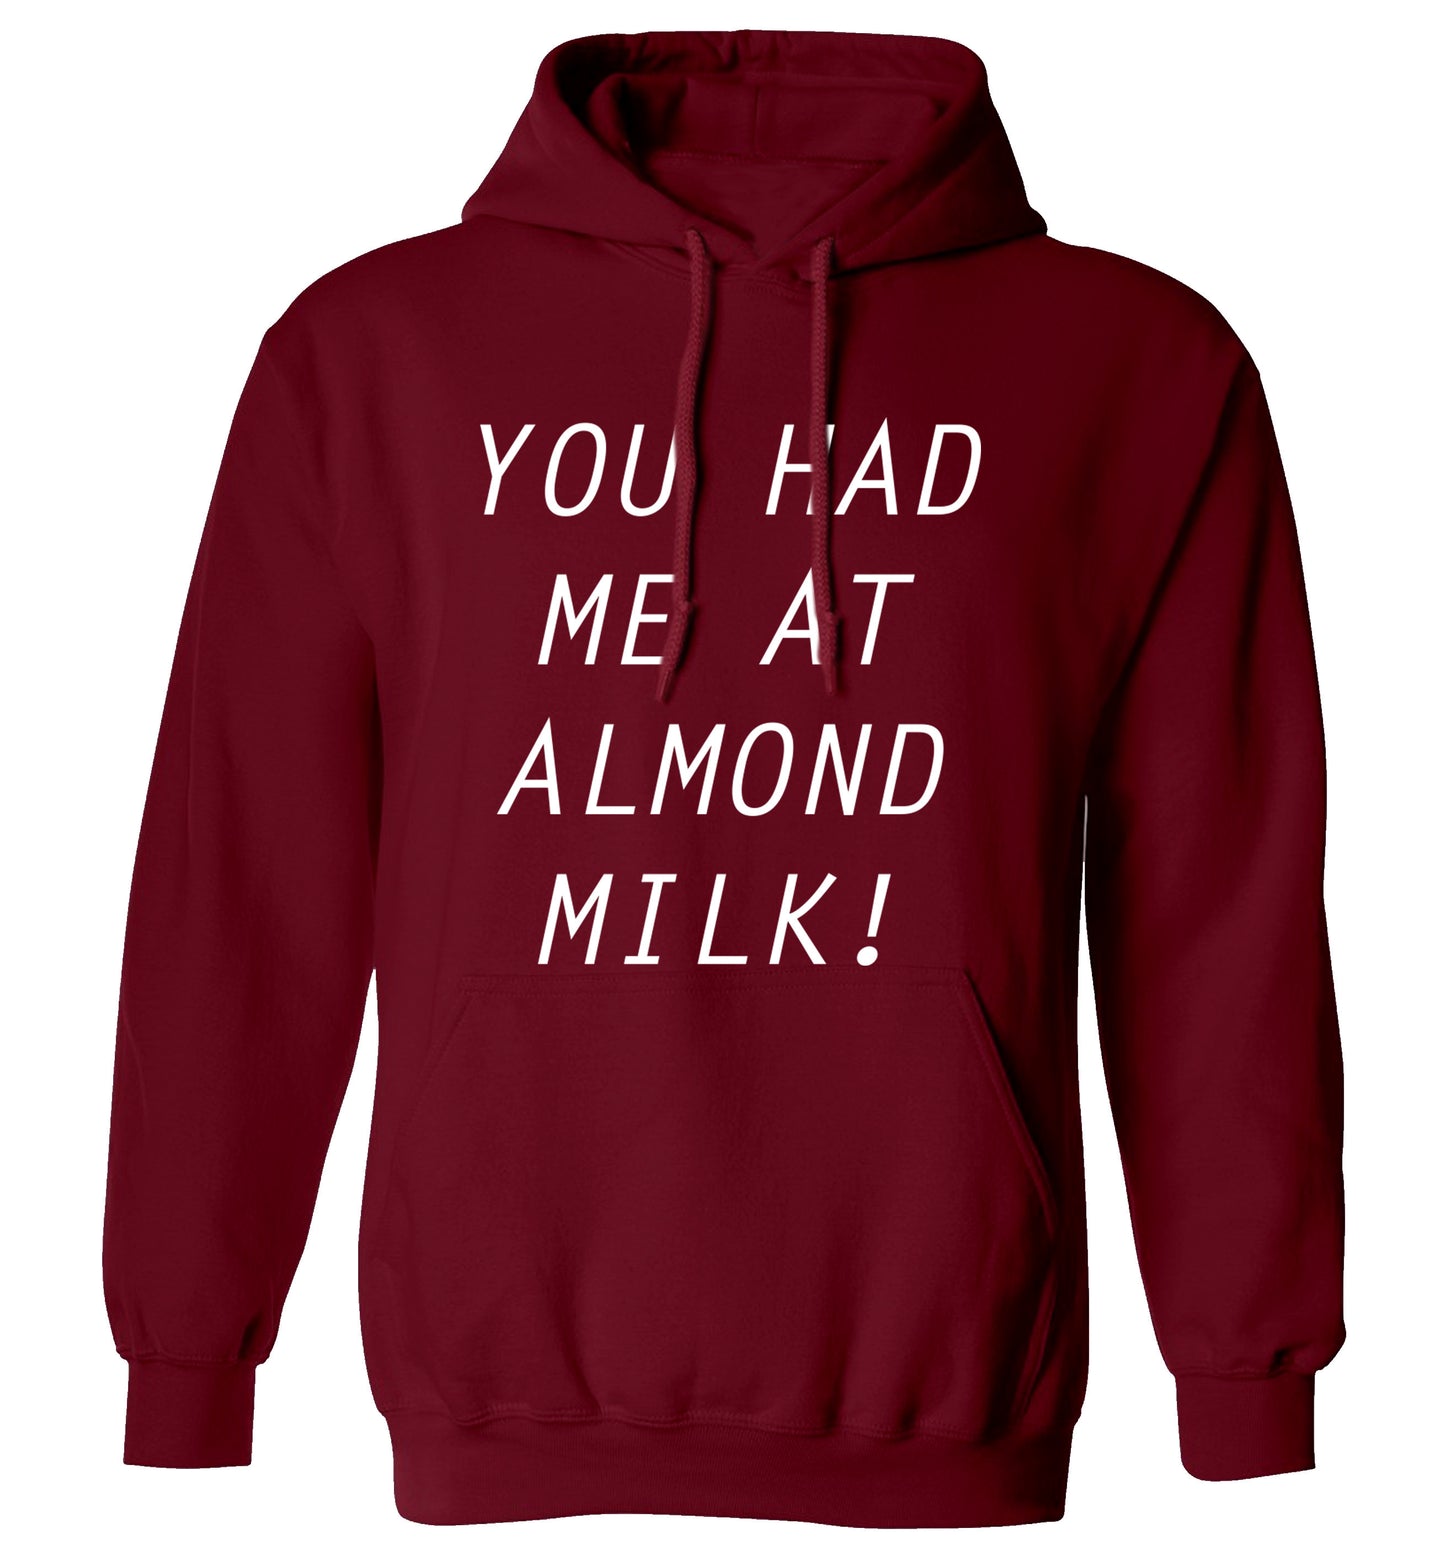 You had me at almond milk adults unisex maroon hoodie 2XL